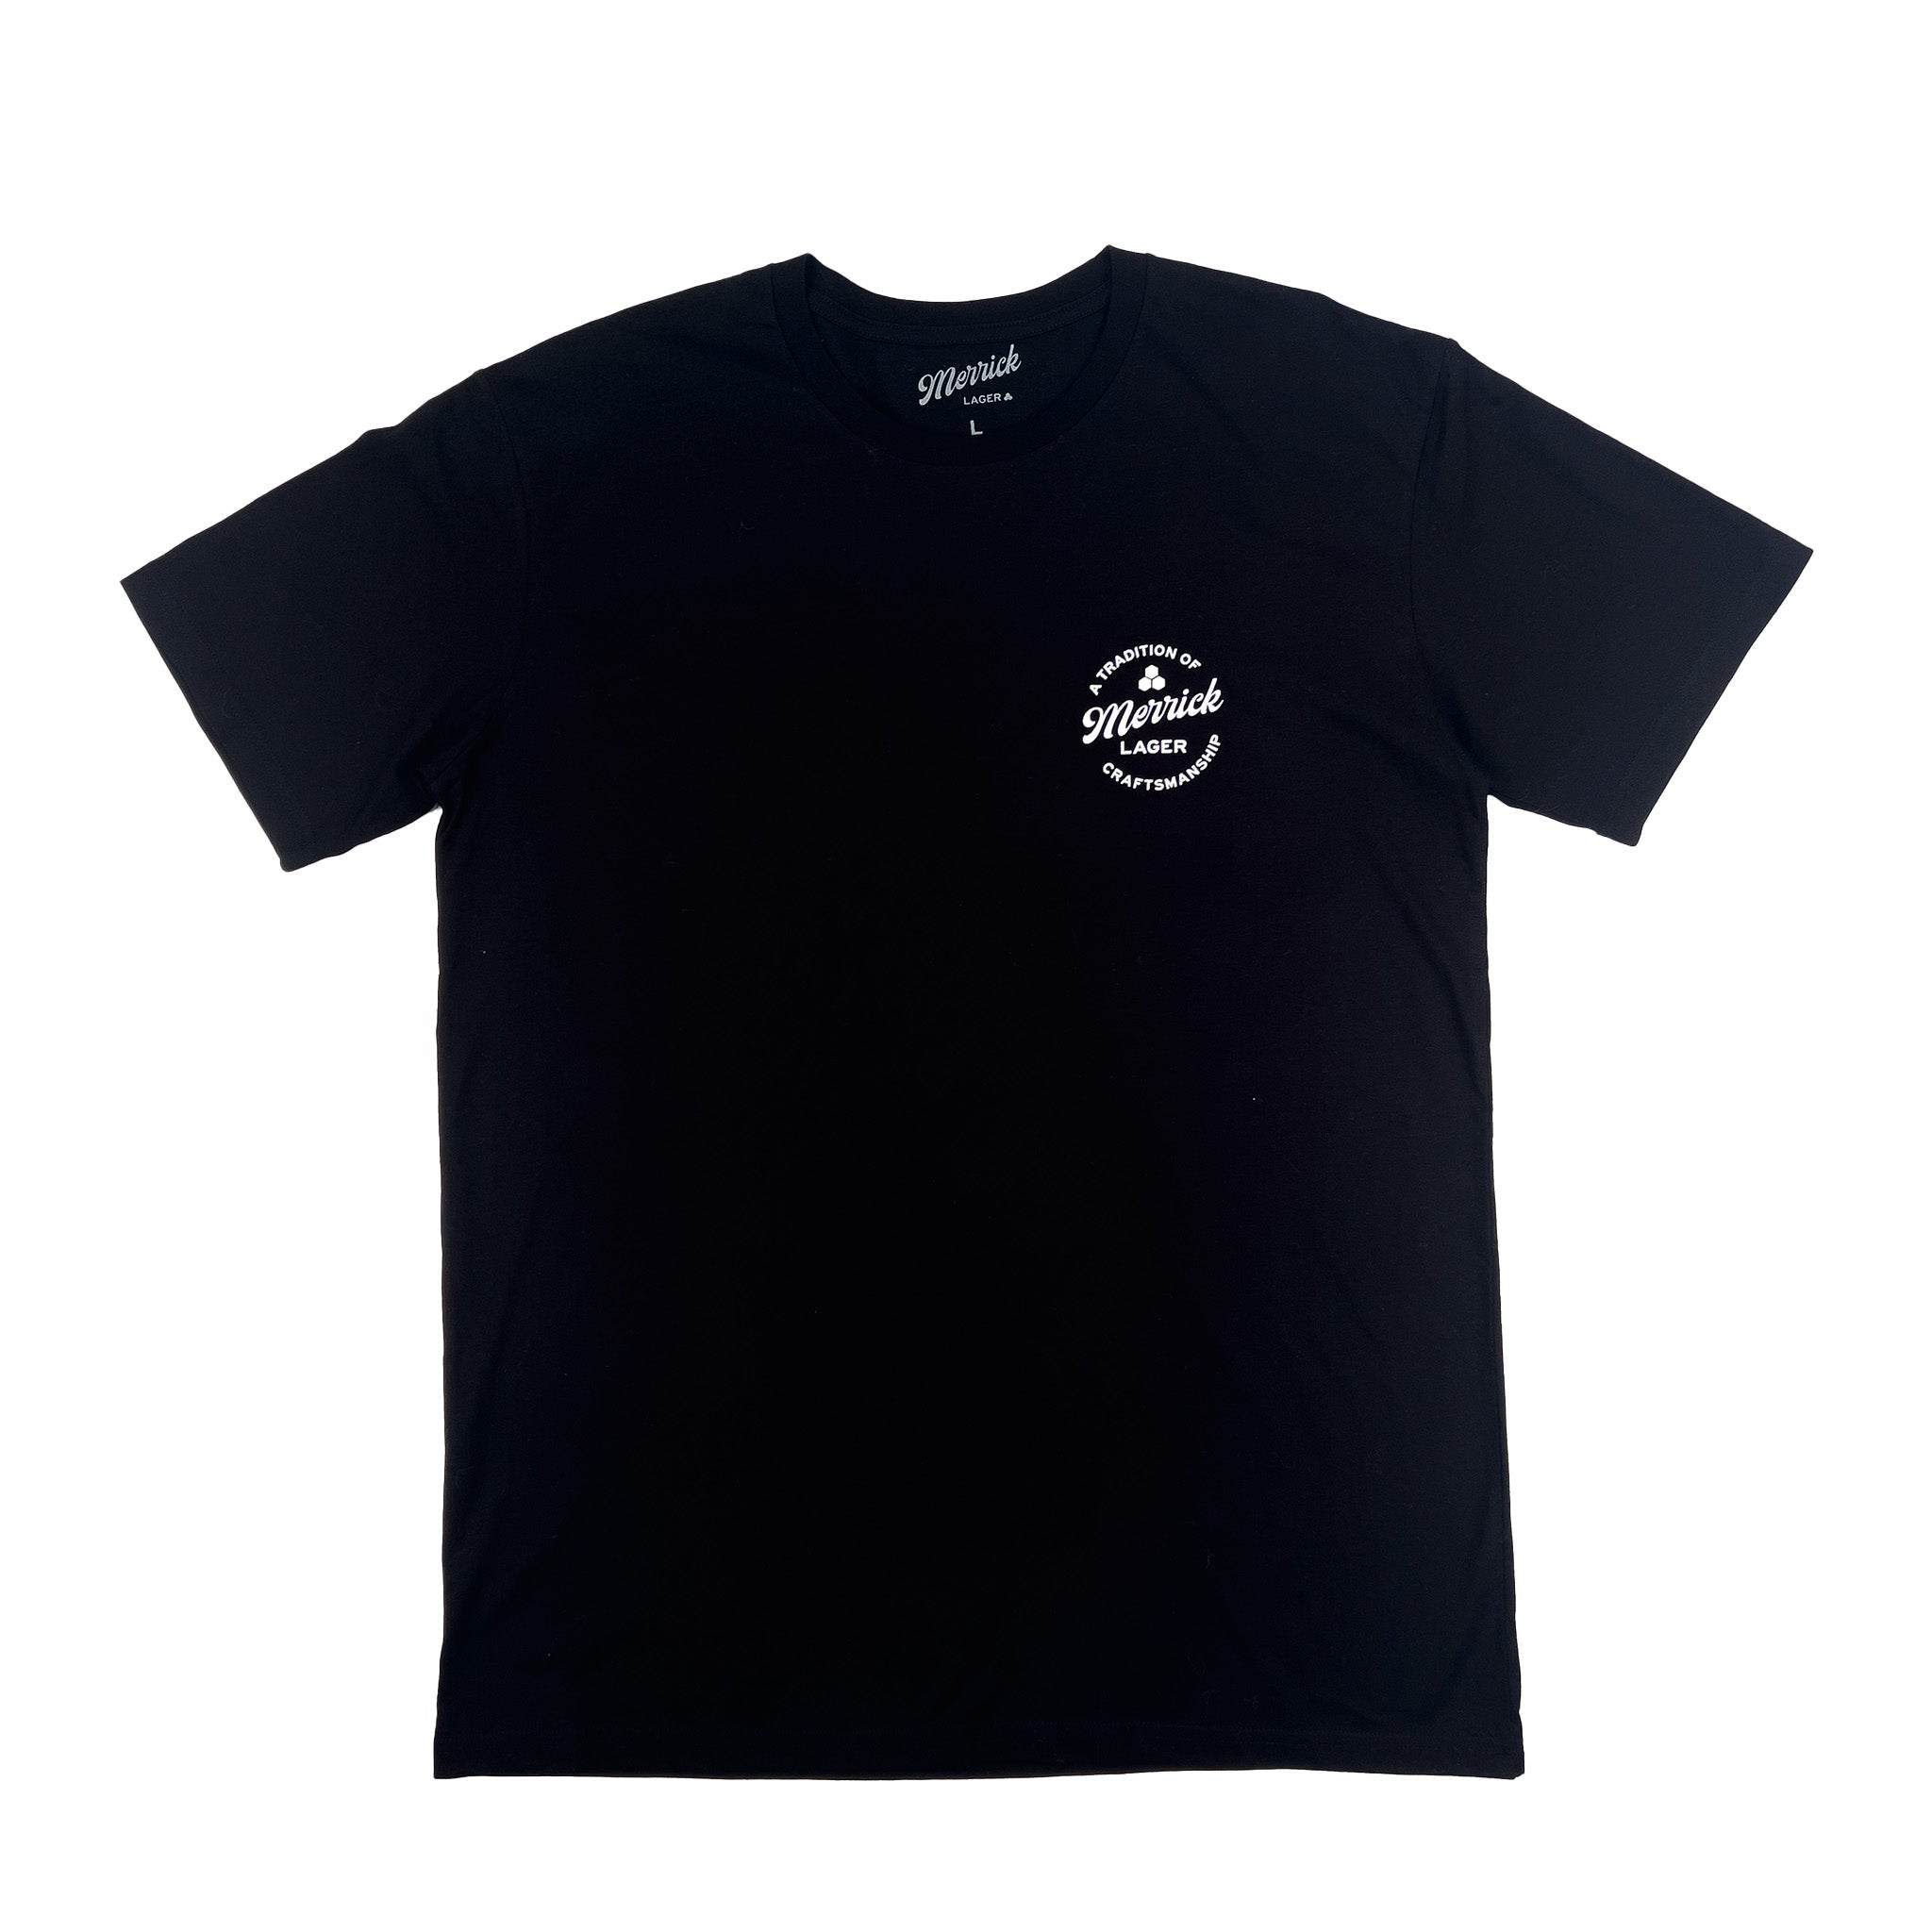 Merrick Lager Circle T-Shirt